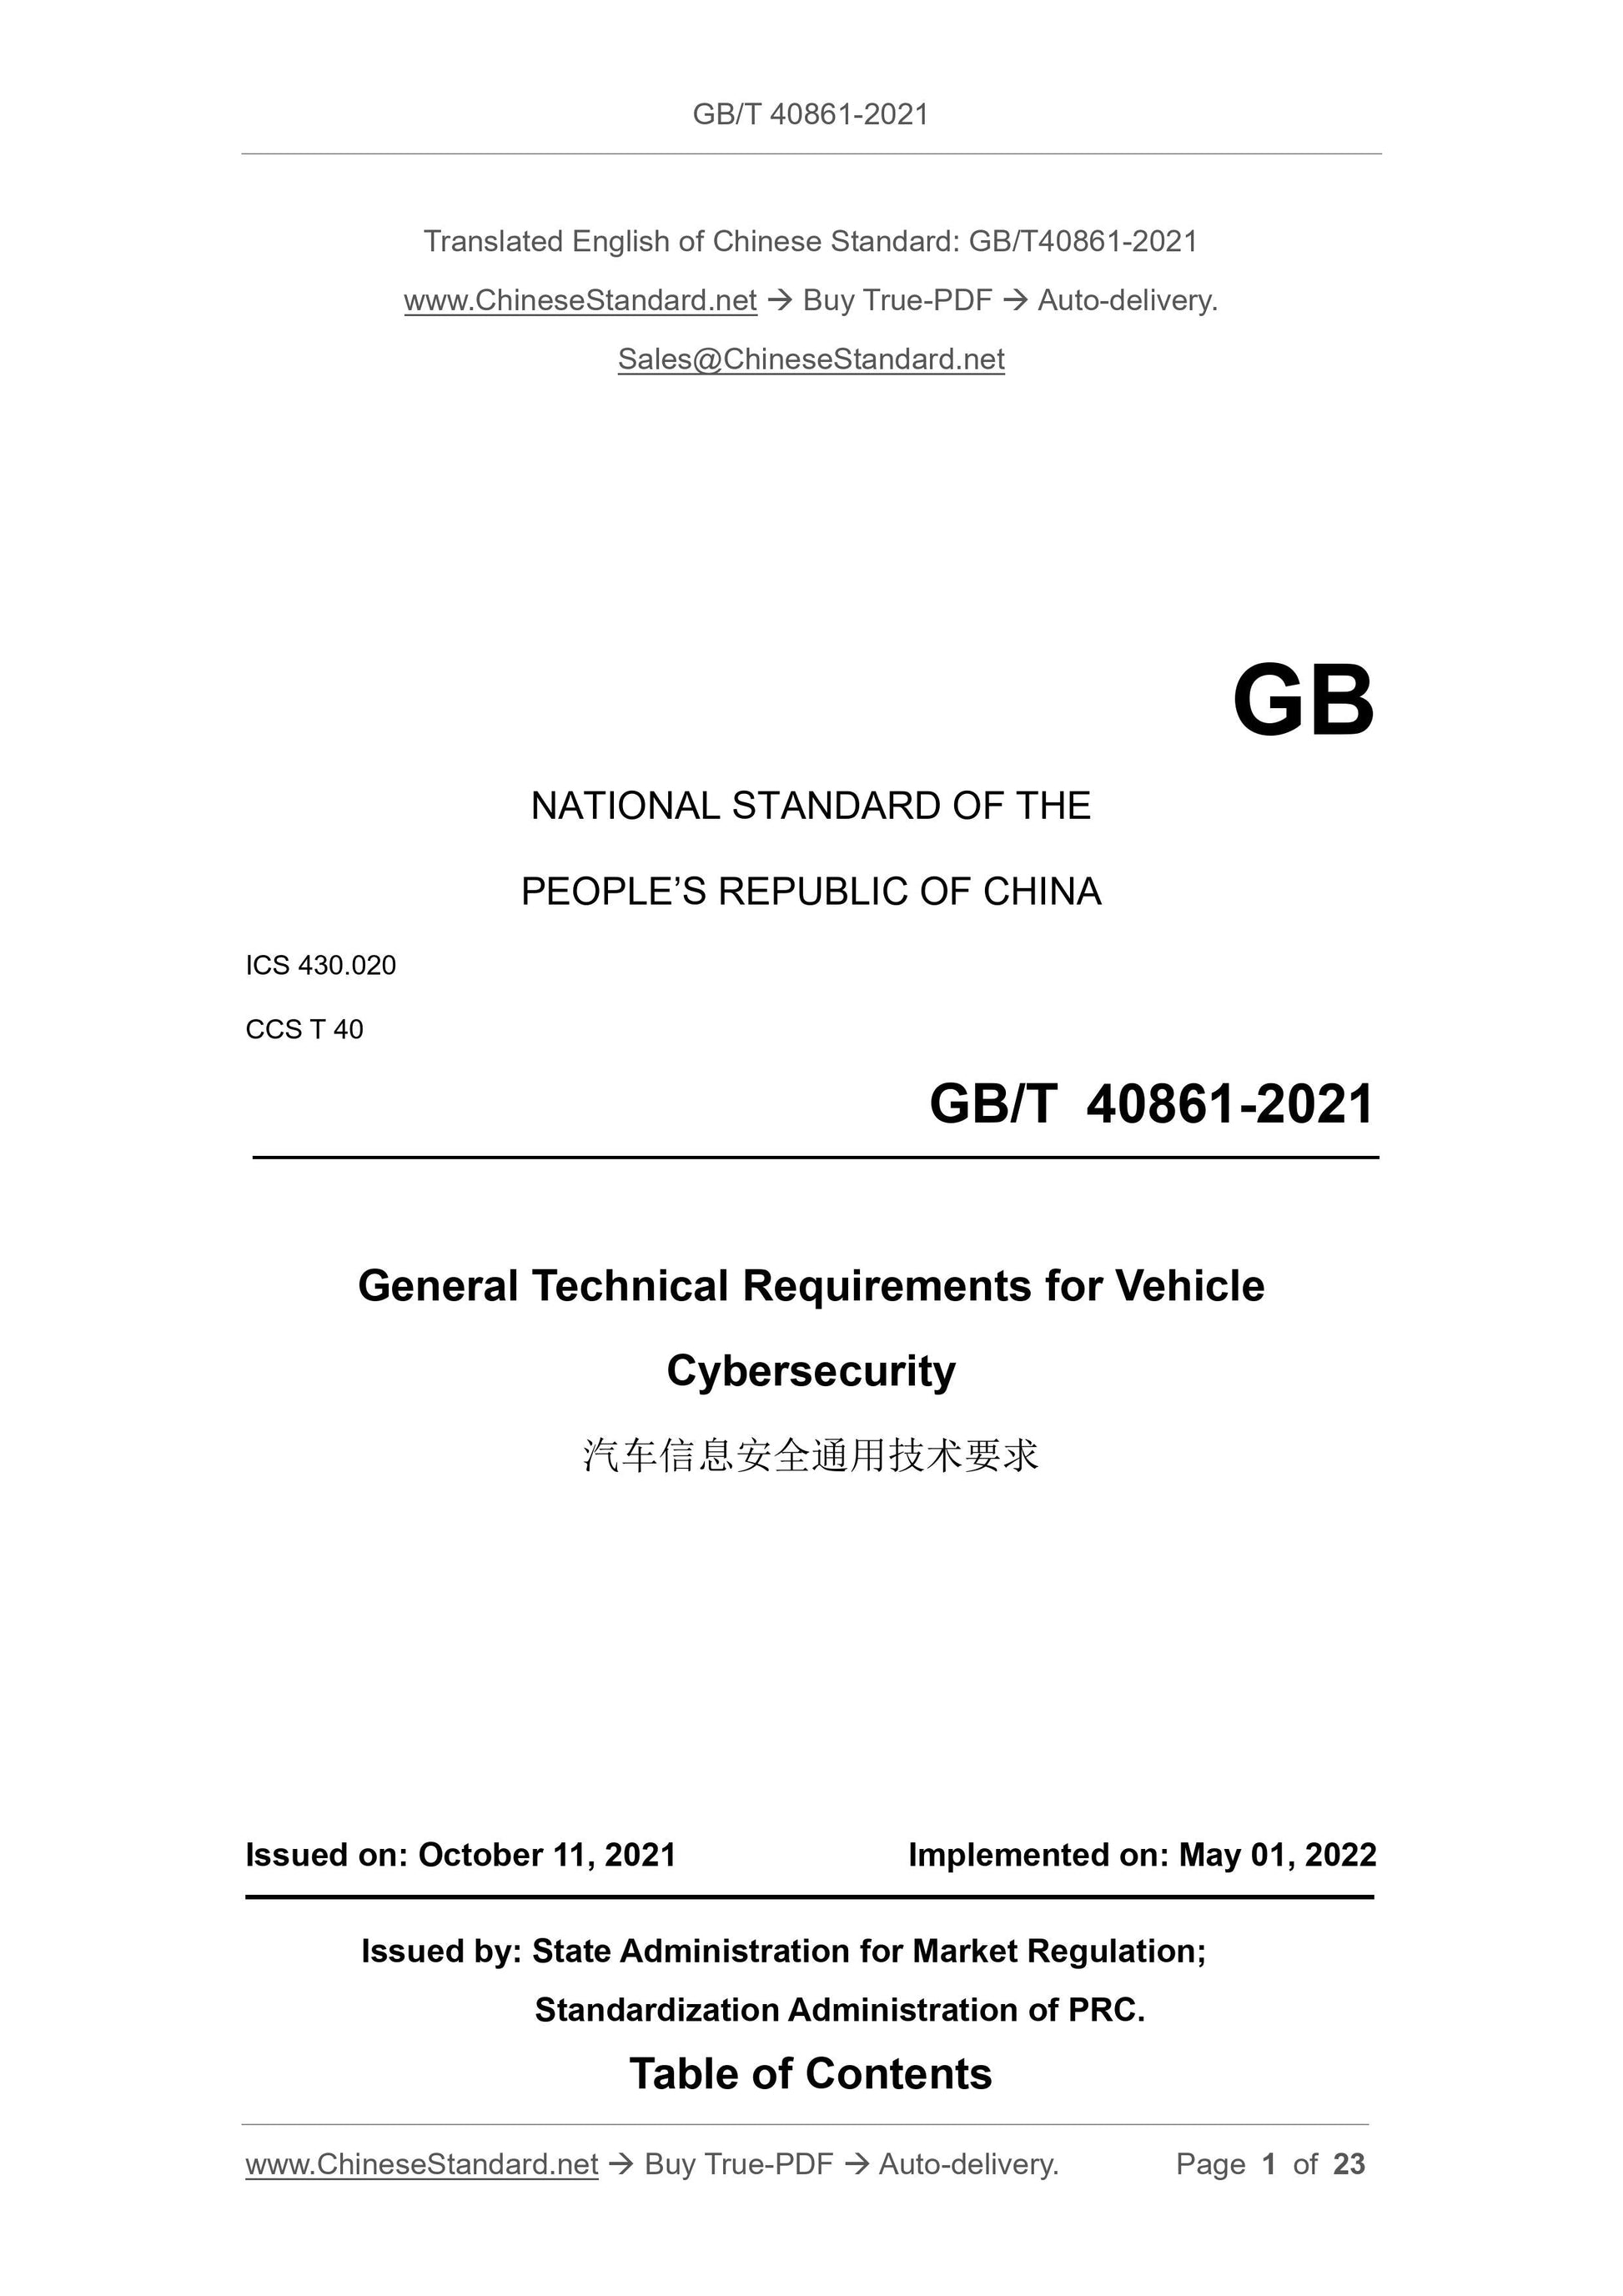 GBT40861-2021 Page 1